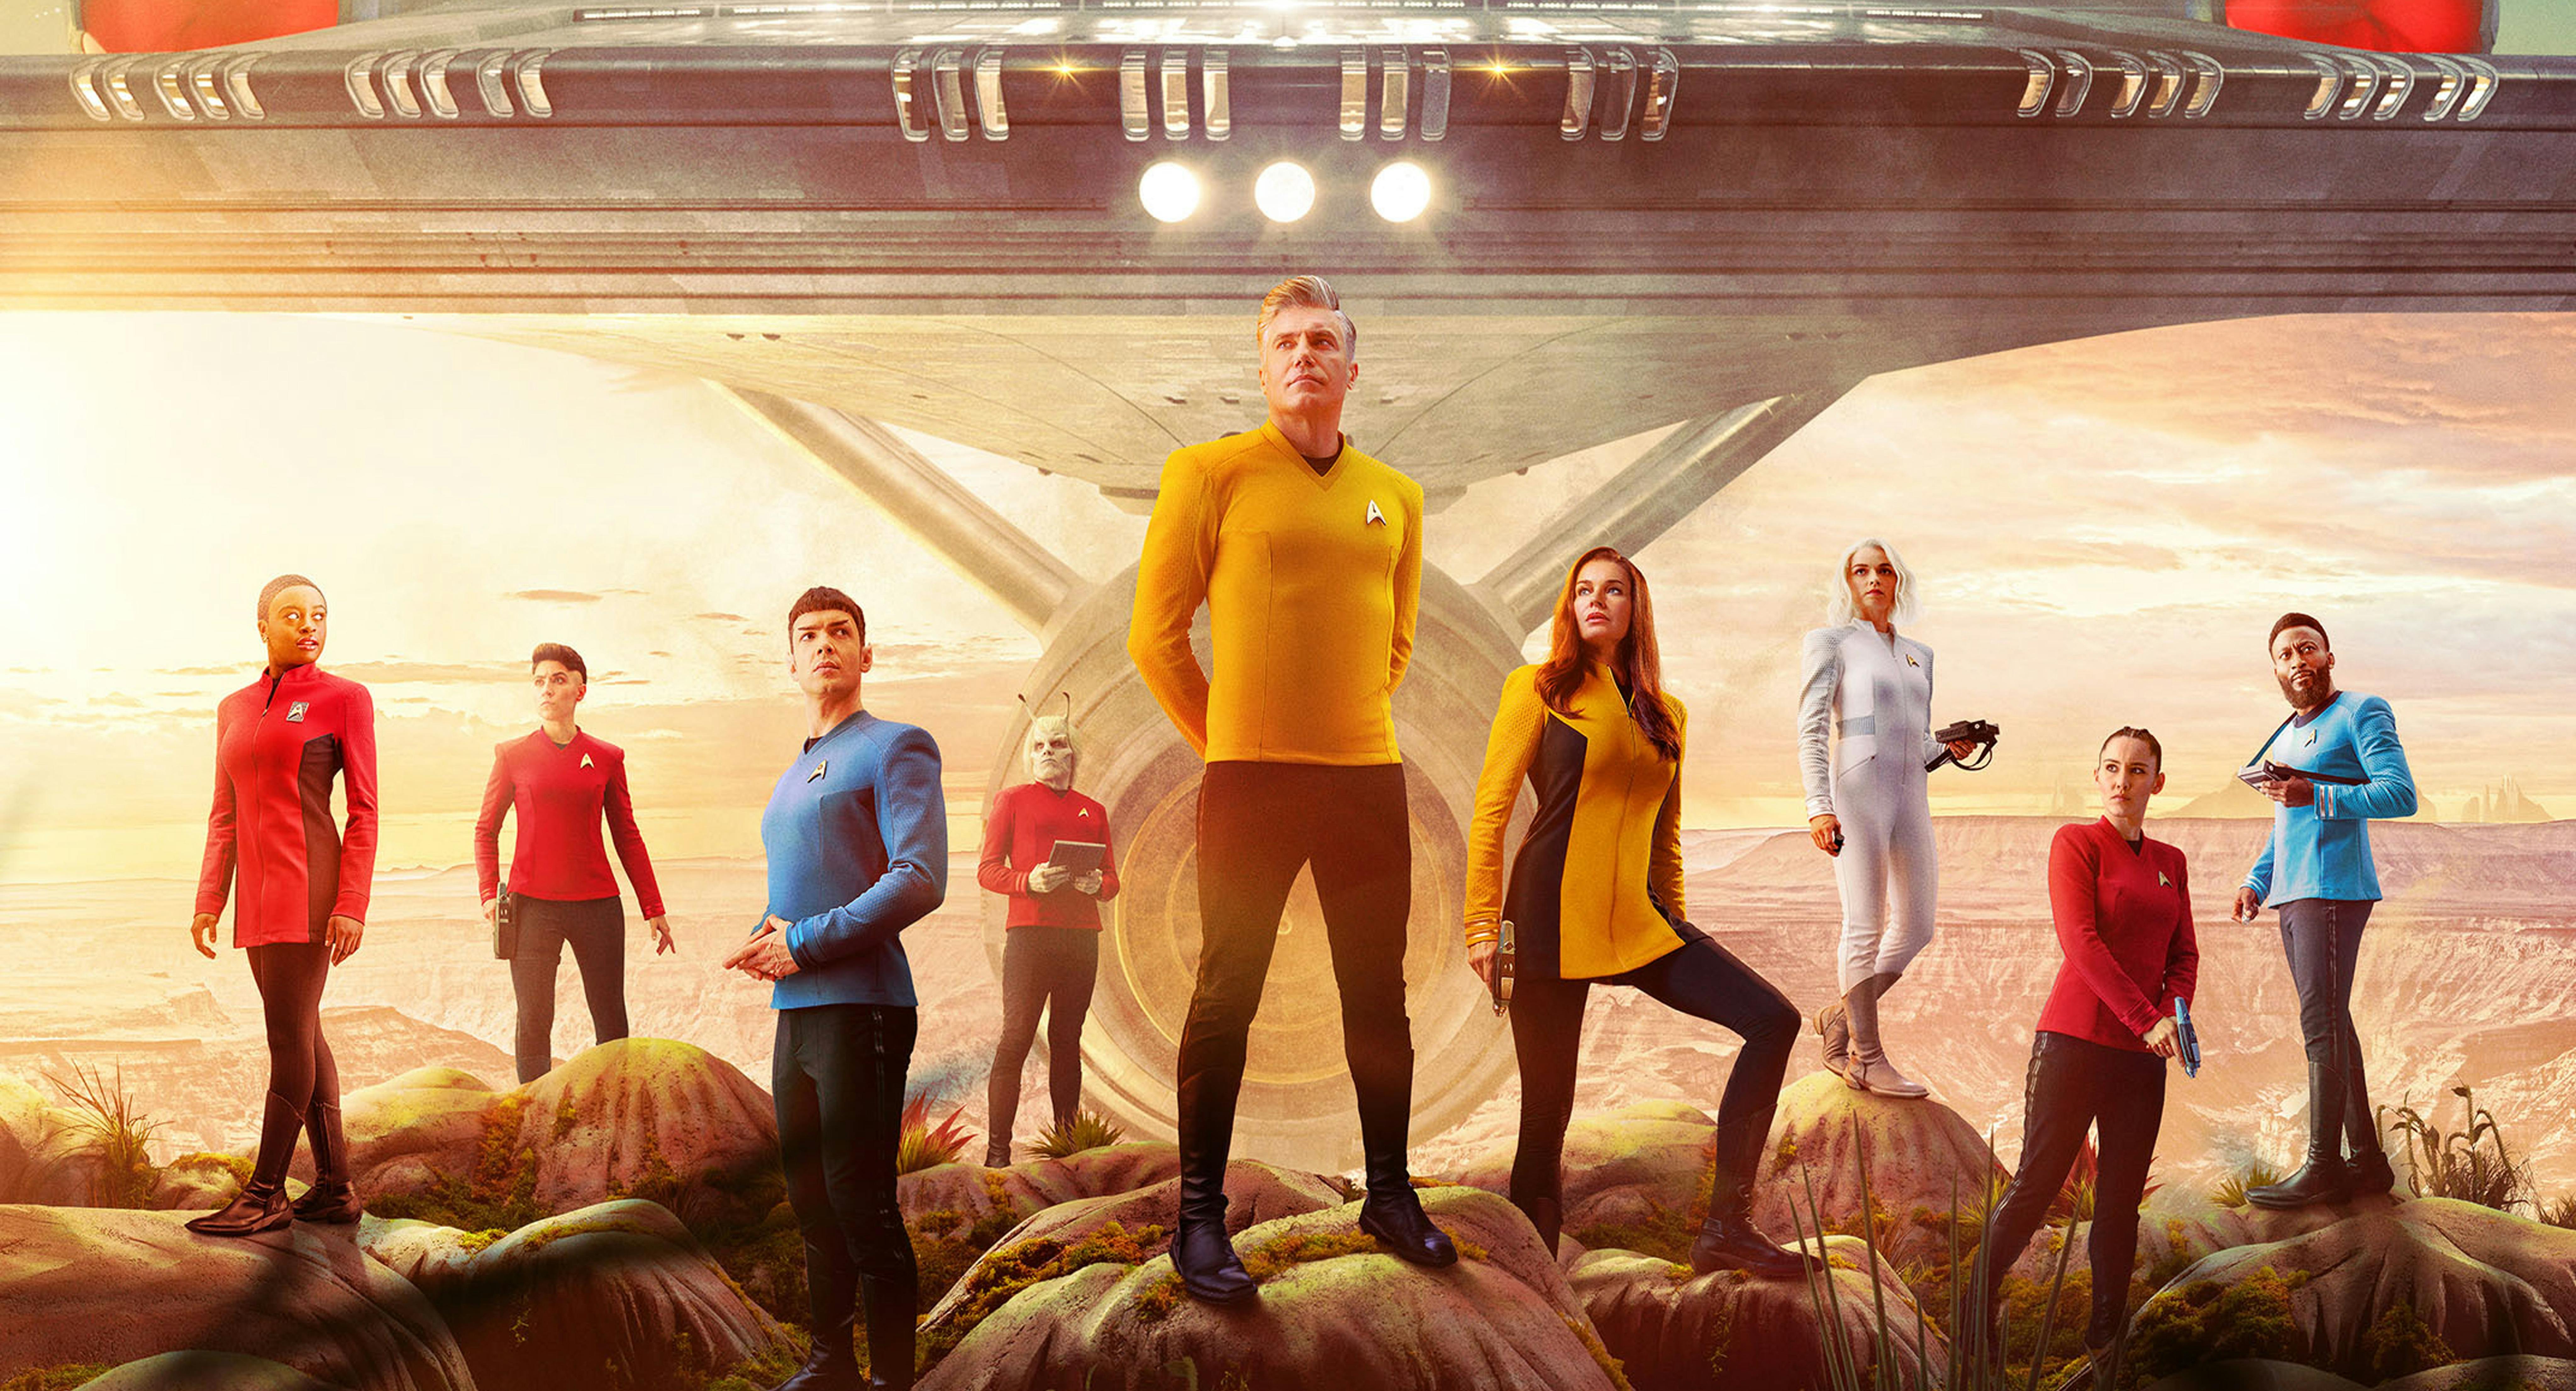 Star Trek Online: Both Worlds - Official New Season Launch Trailer 